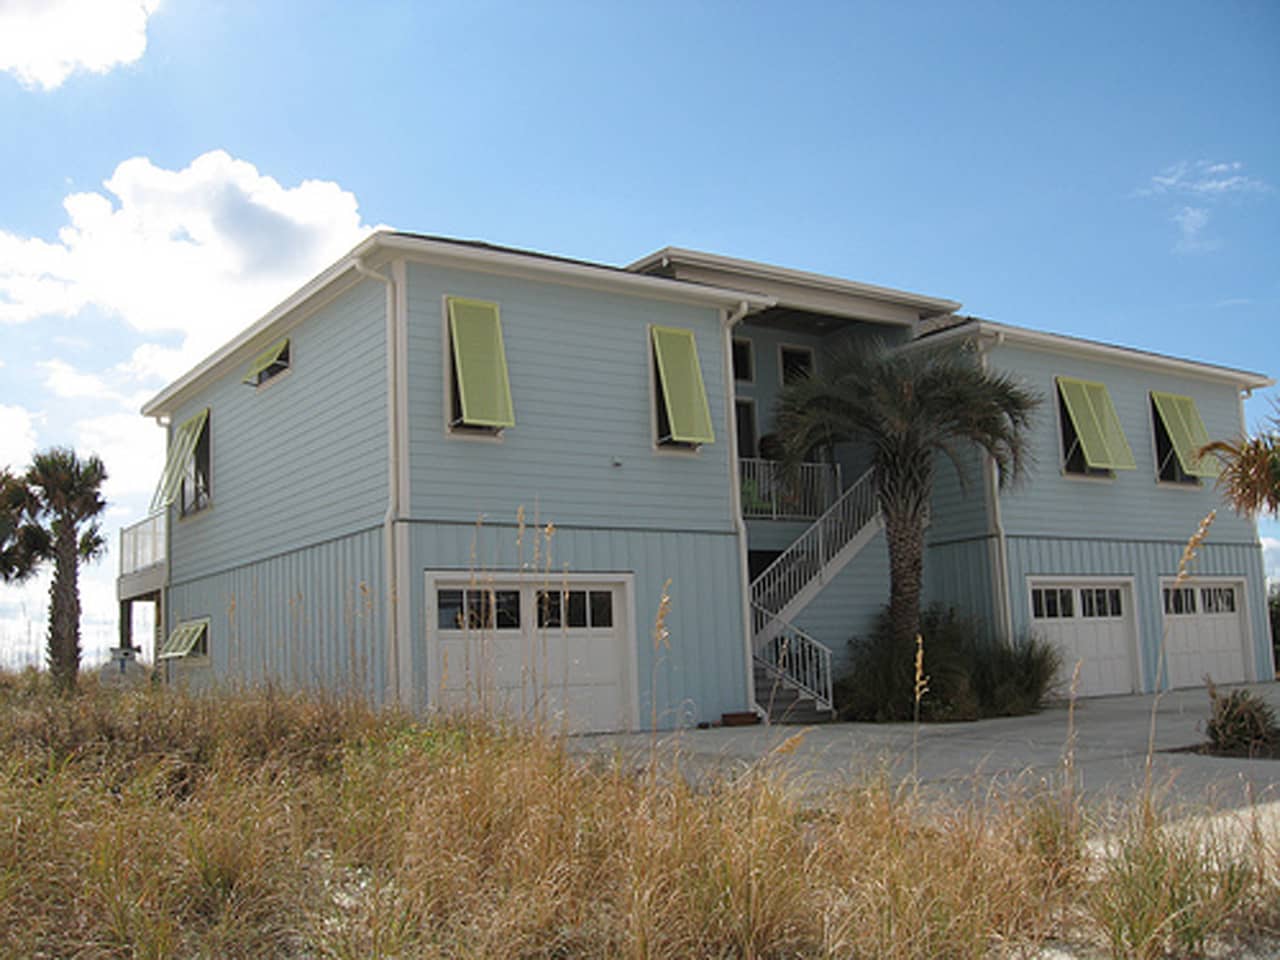 Bahama shutters on a beach house